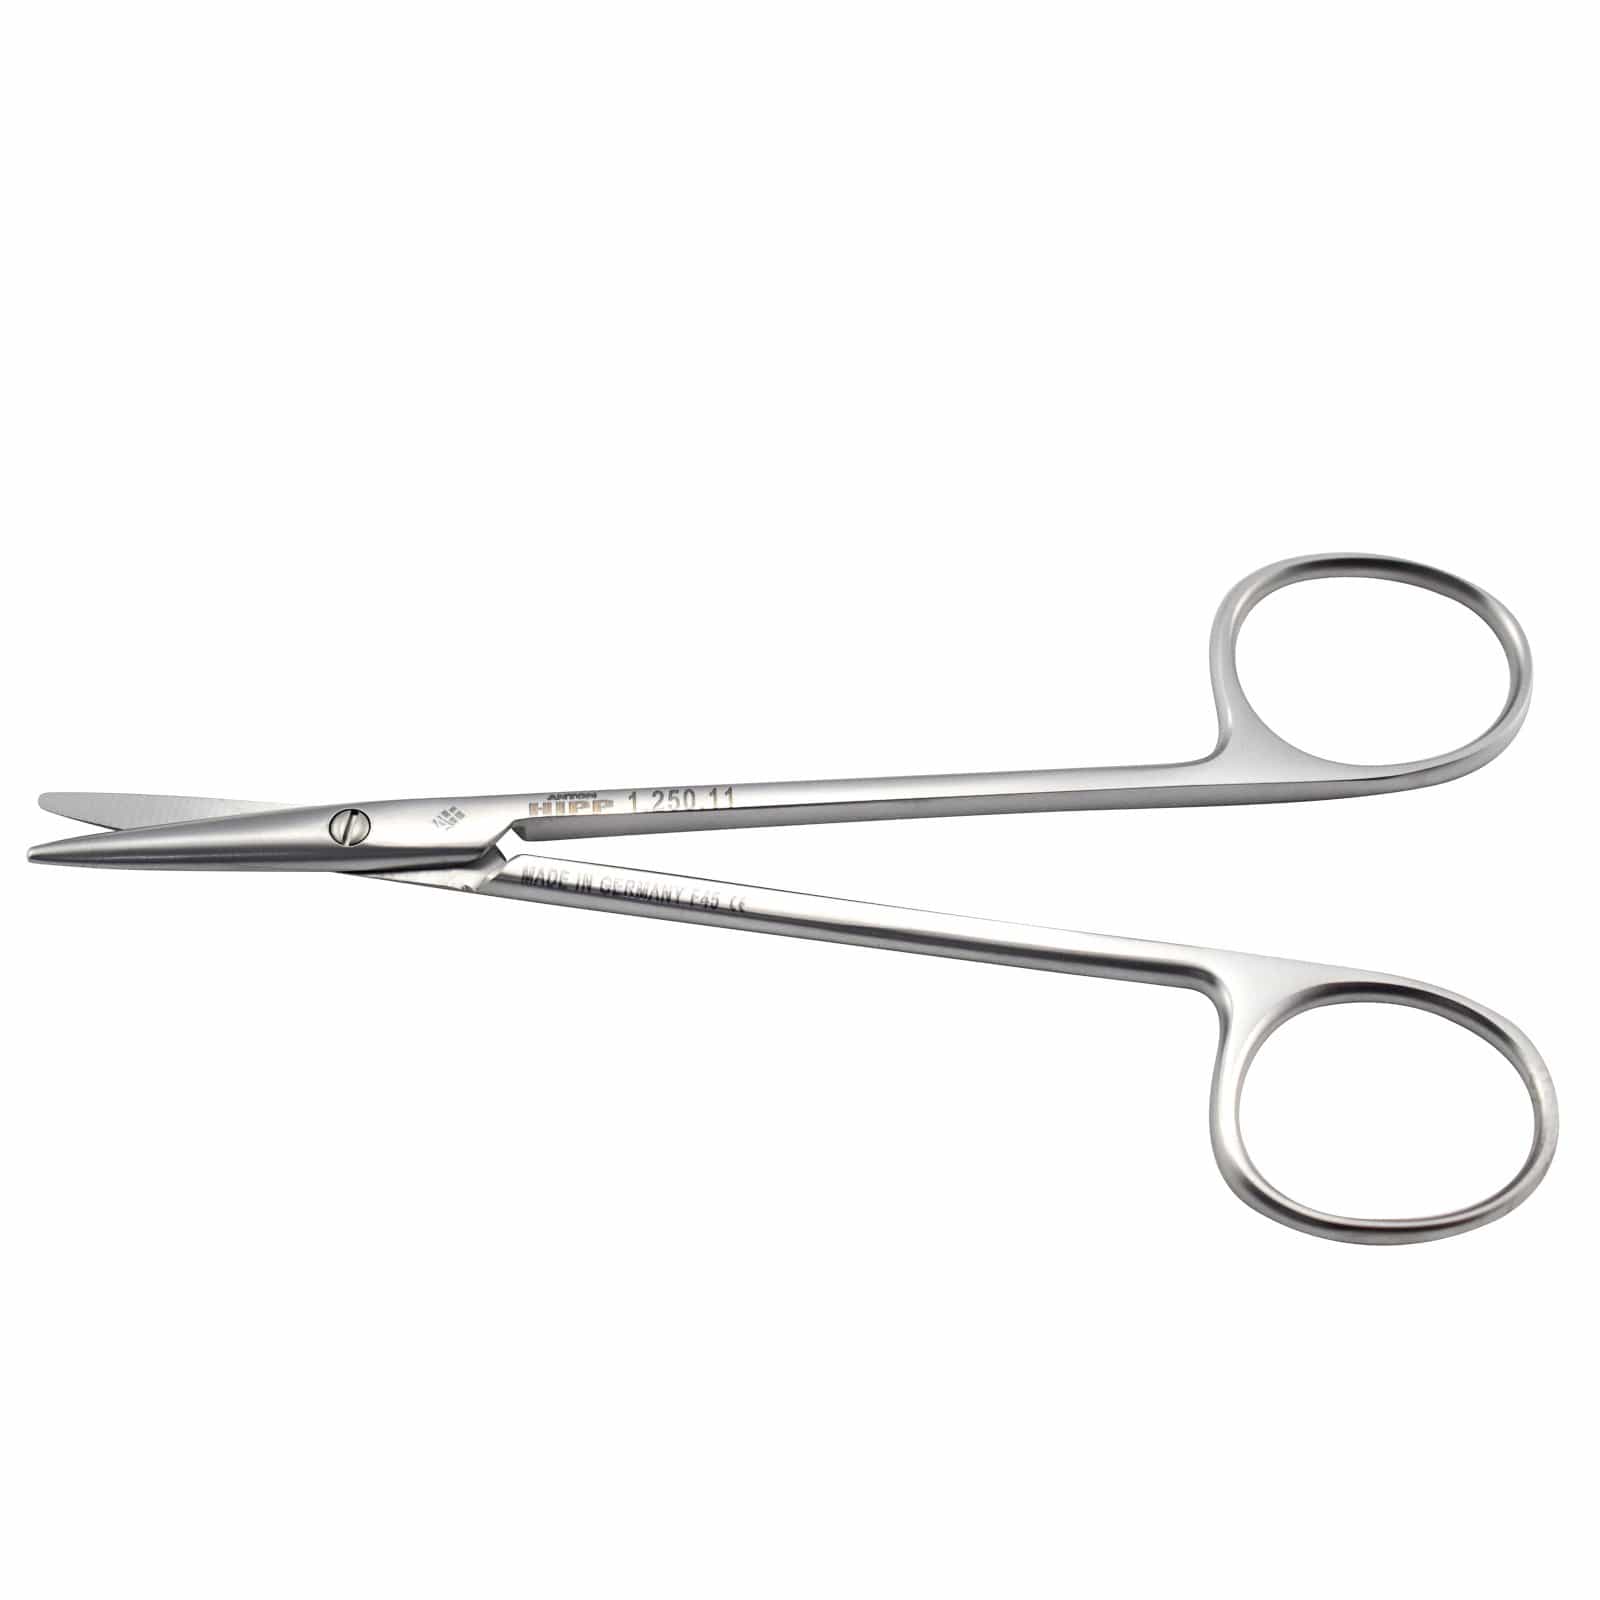 Hipp Surgical Instruments Hipp Strabismus Scissors